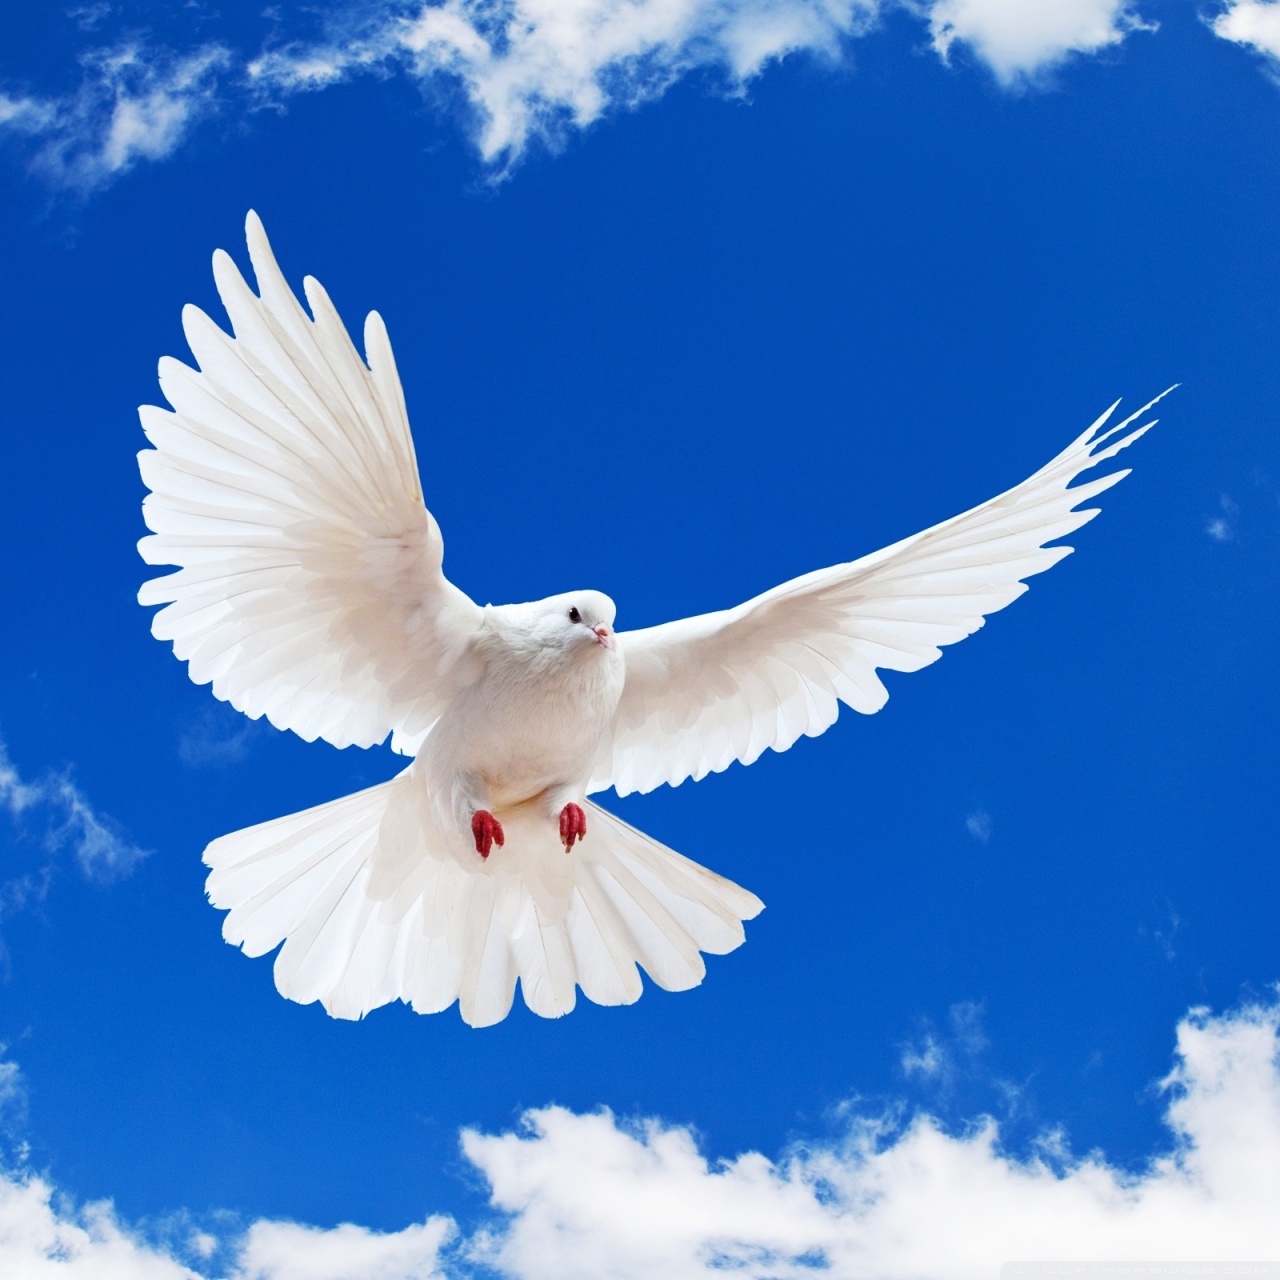 Ipad - World Peace Dove , HD Wallpaper & Backgrounds